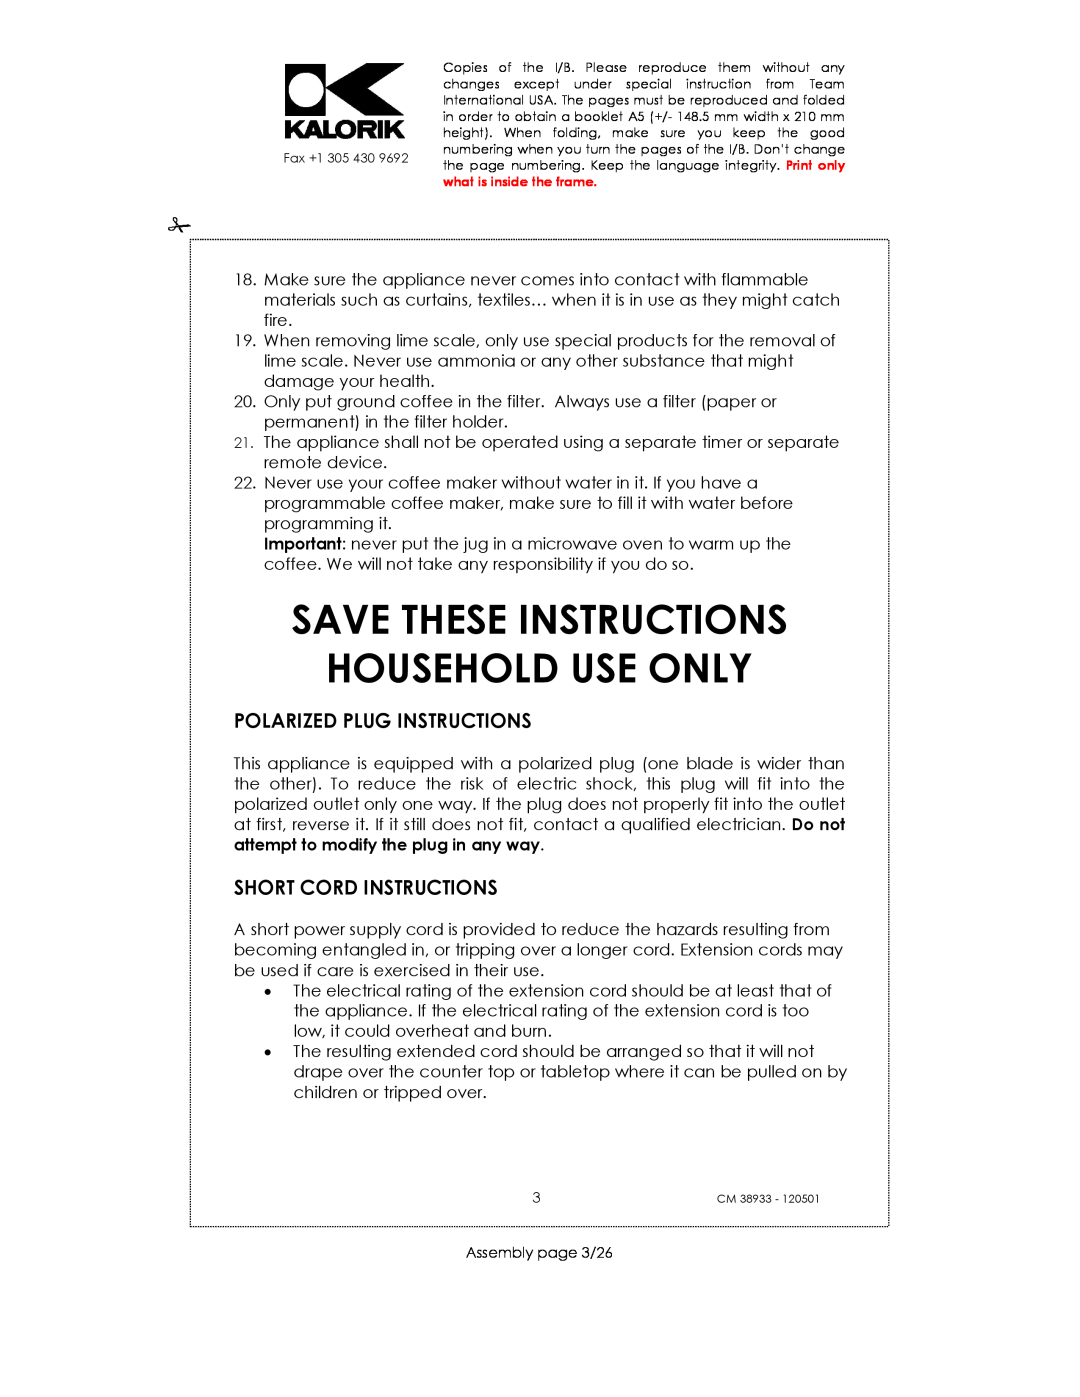 Kalorik CM 38933 manual Save These Instructions Household Use Only, Polarized Plug Instructions, Short Cord Instructions 